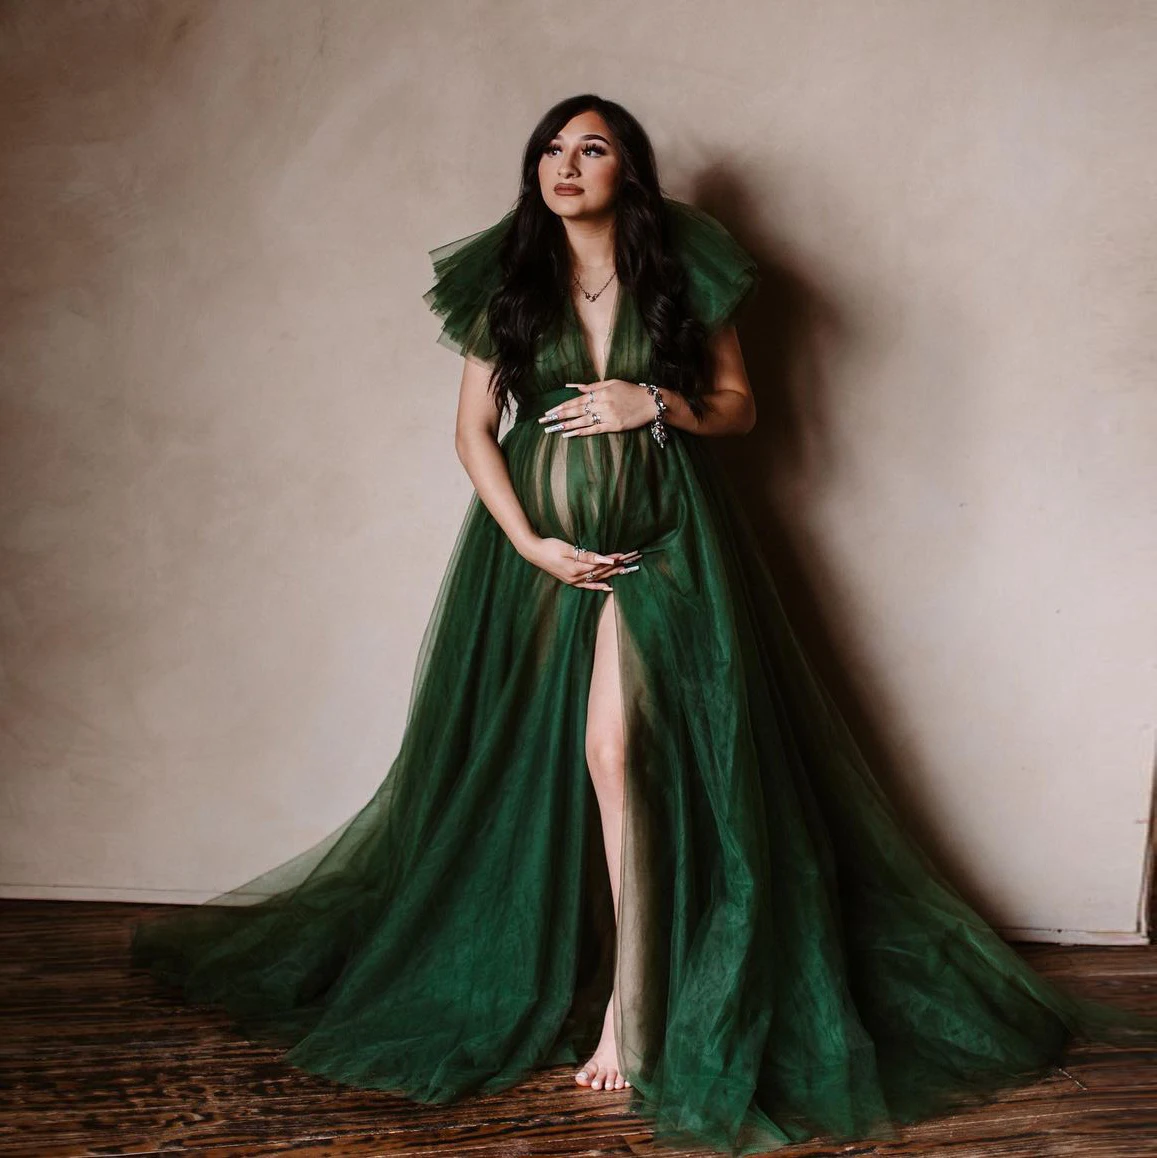 

Dark Green Tulle Dress Floor Length Evening Dresses V-Neck Ruffles Shoulder A-Line Maternity Dress For Photoshoot Long Rob